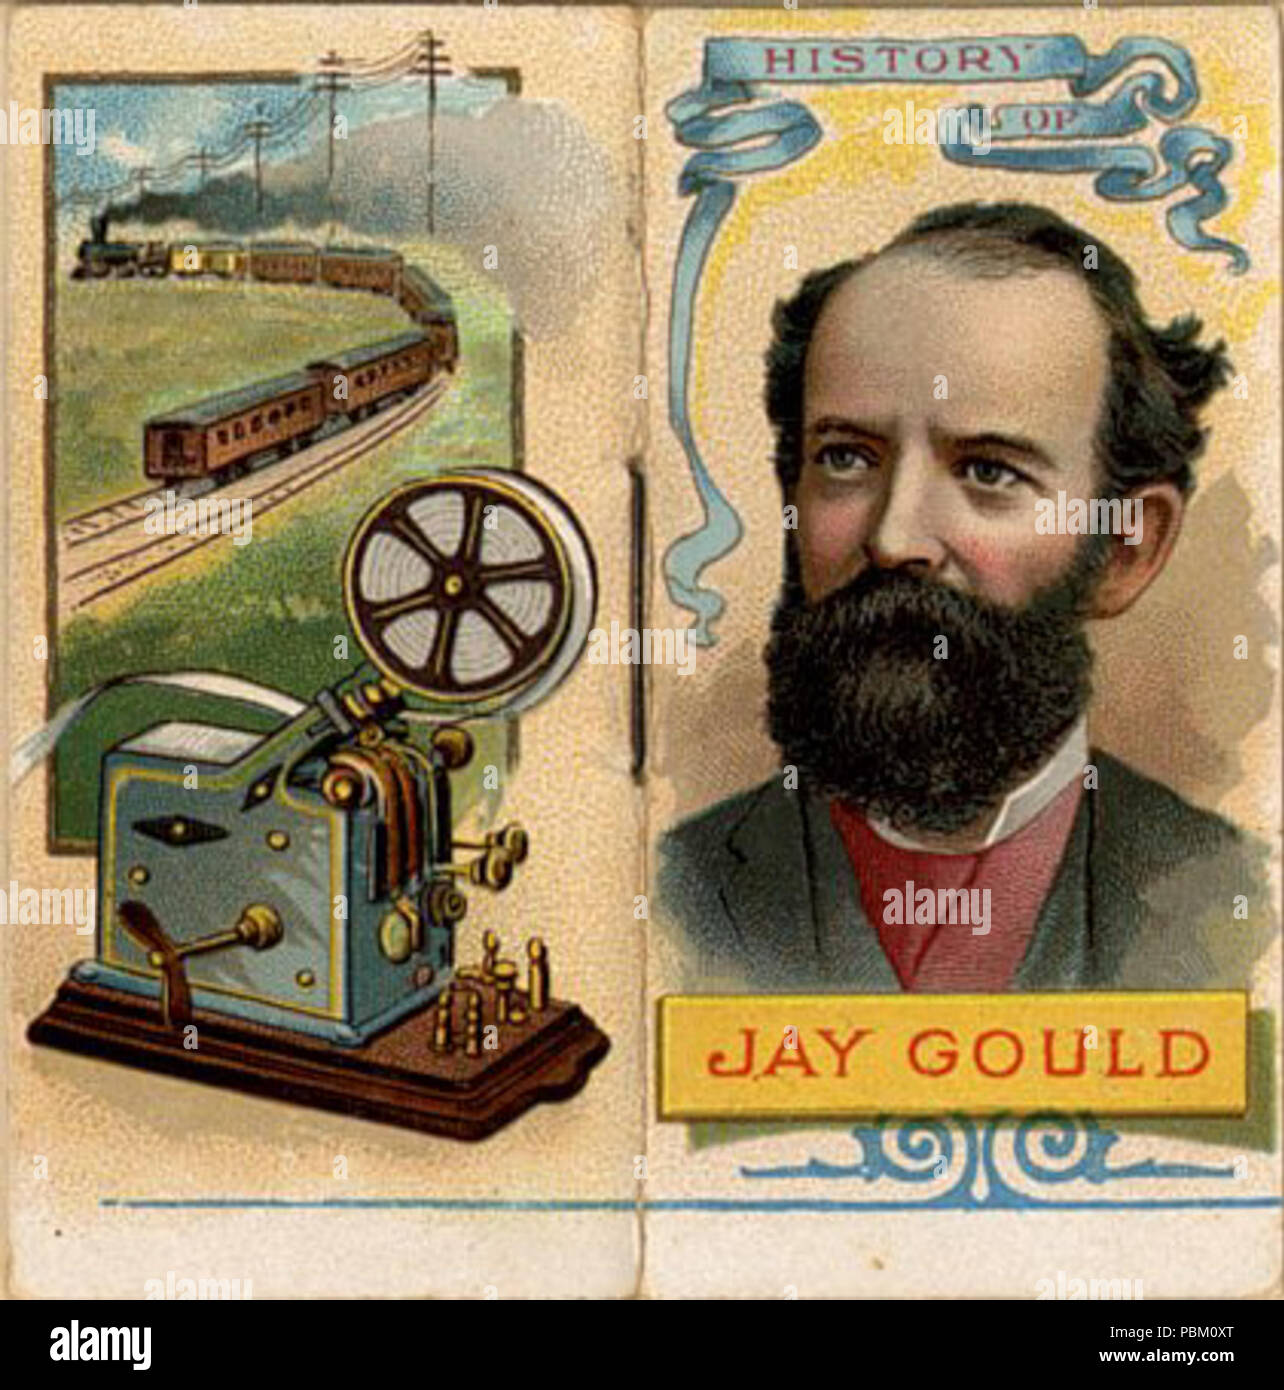 762 History of jay gould Stock Photo